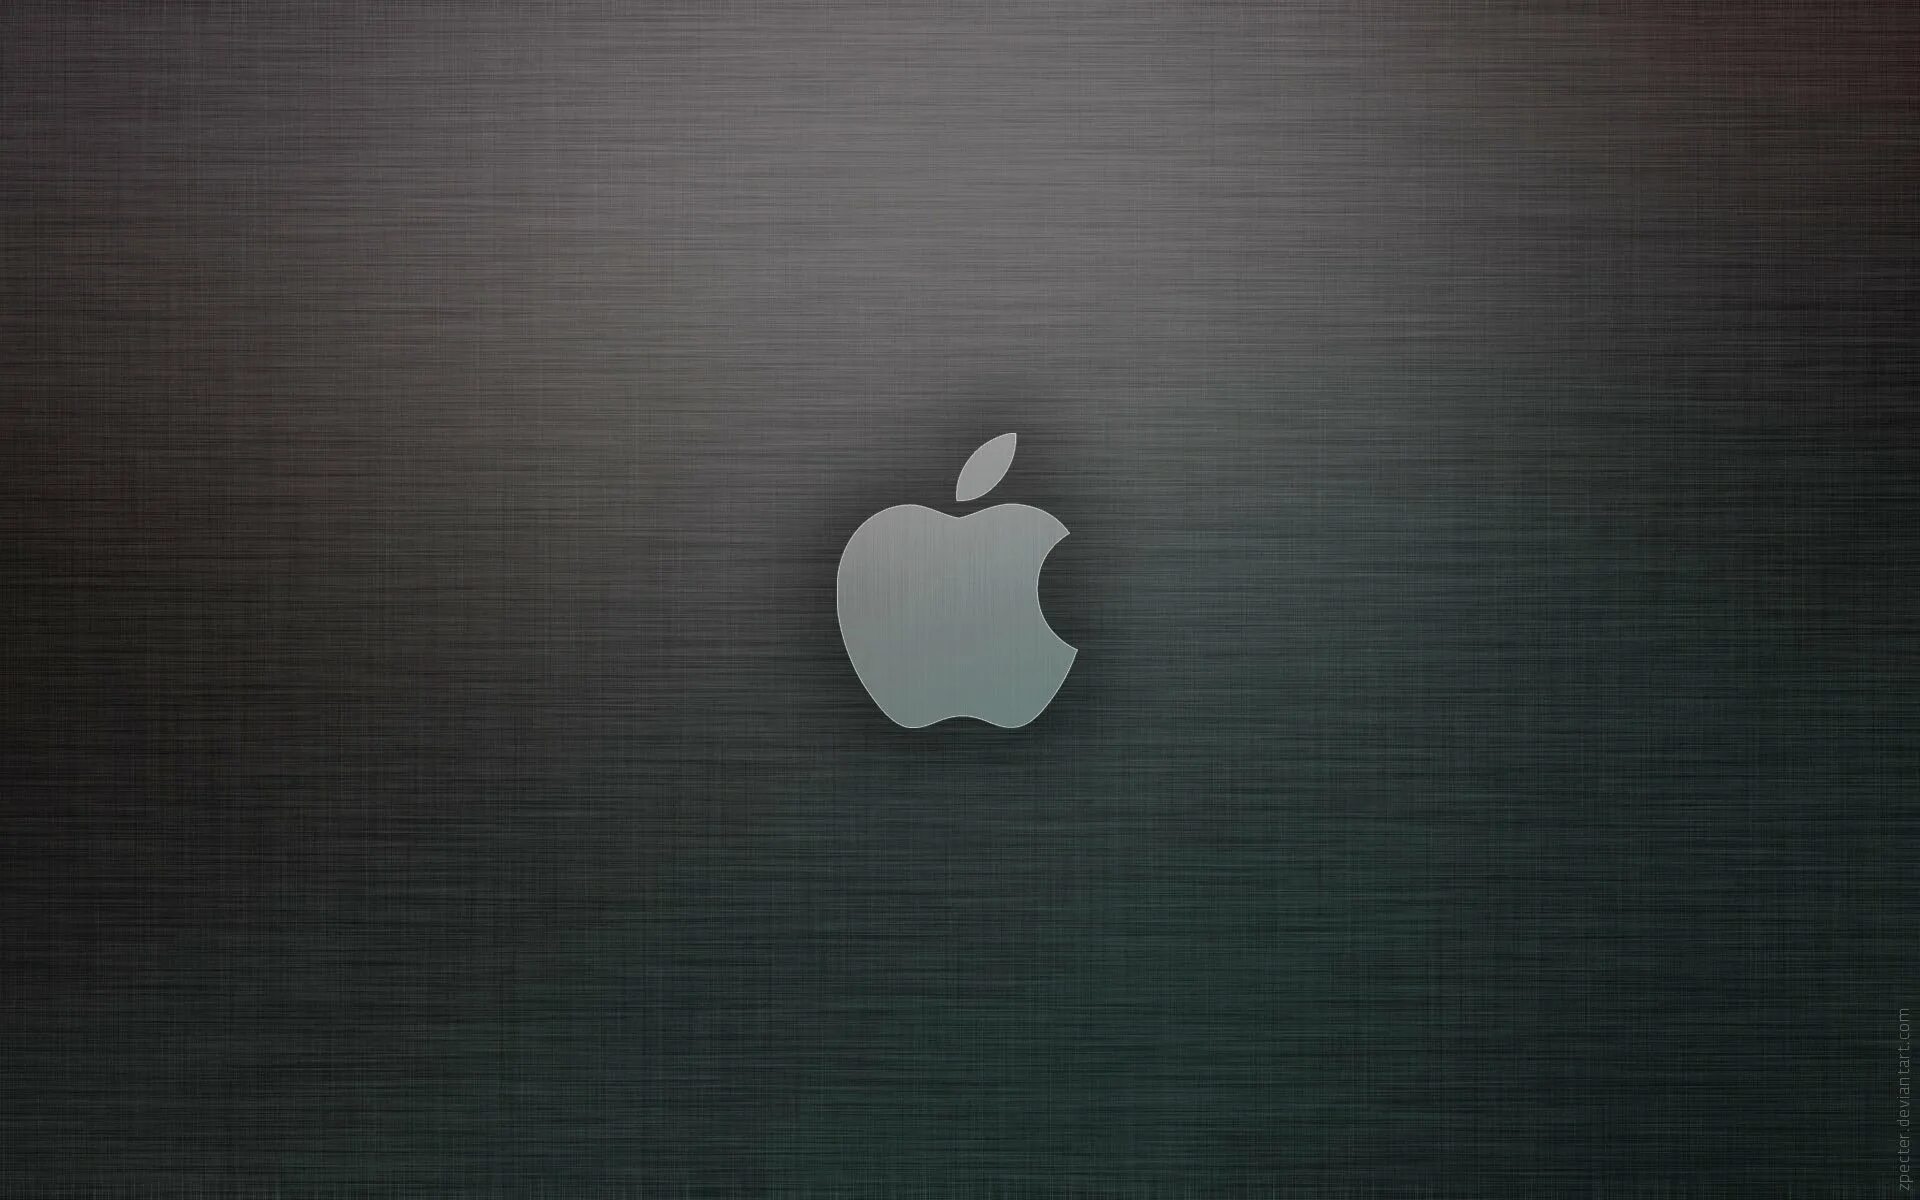 Обои эппл. Обои Apple. Рабочий стол Apple. Яблоко Apple. Обои на рабочий стол айфон.